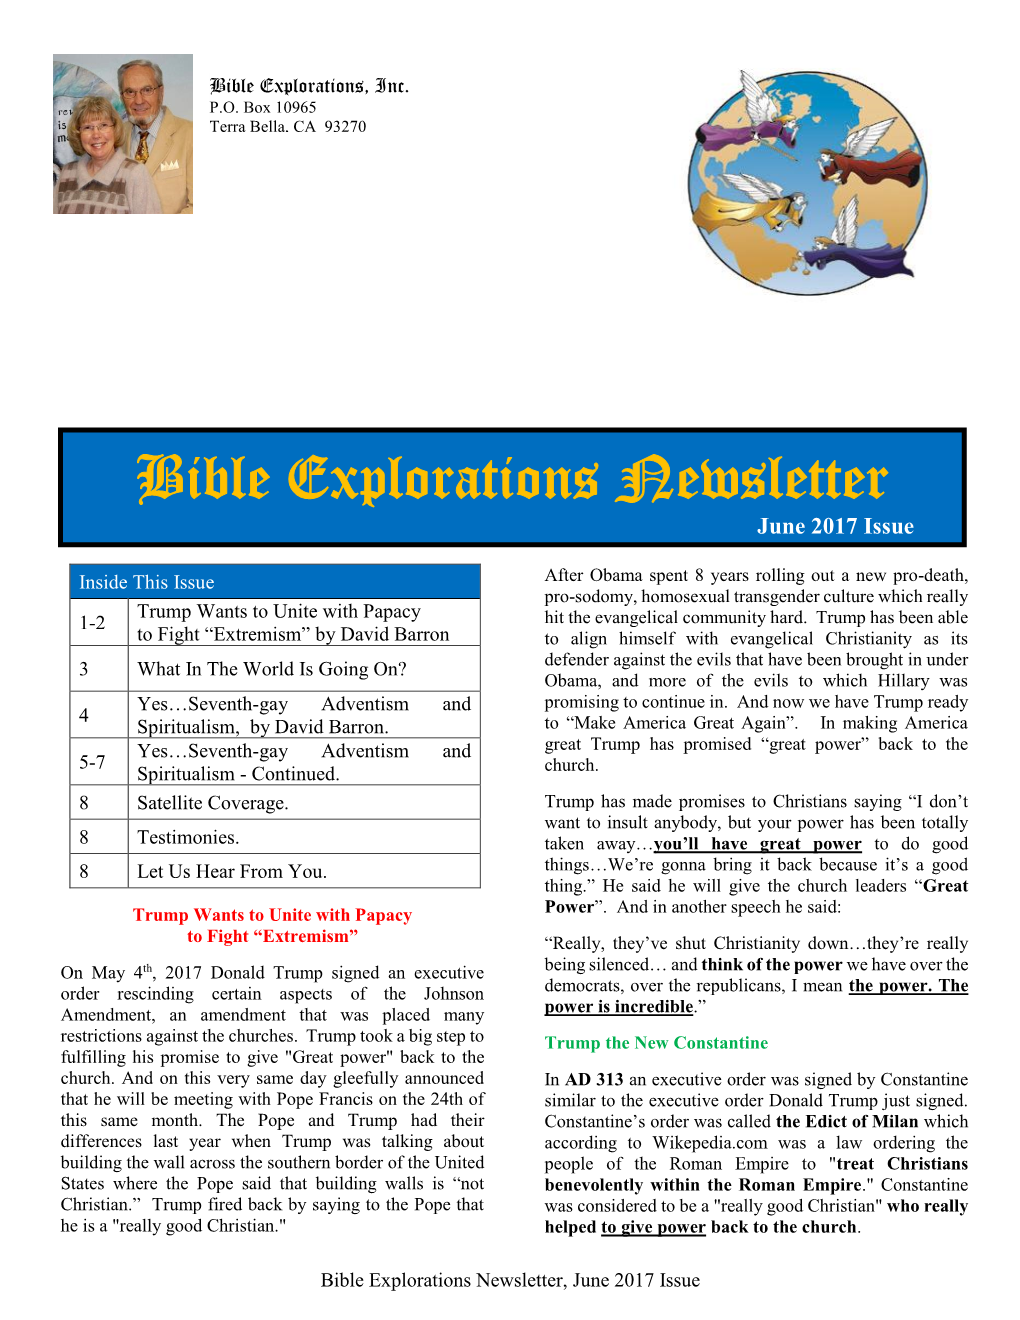 Bible Explorations Newsletter